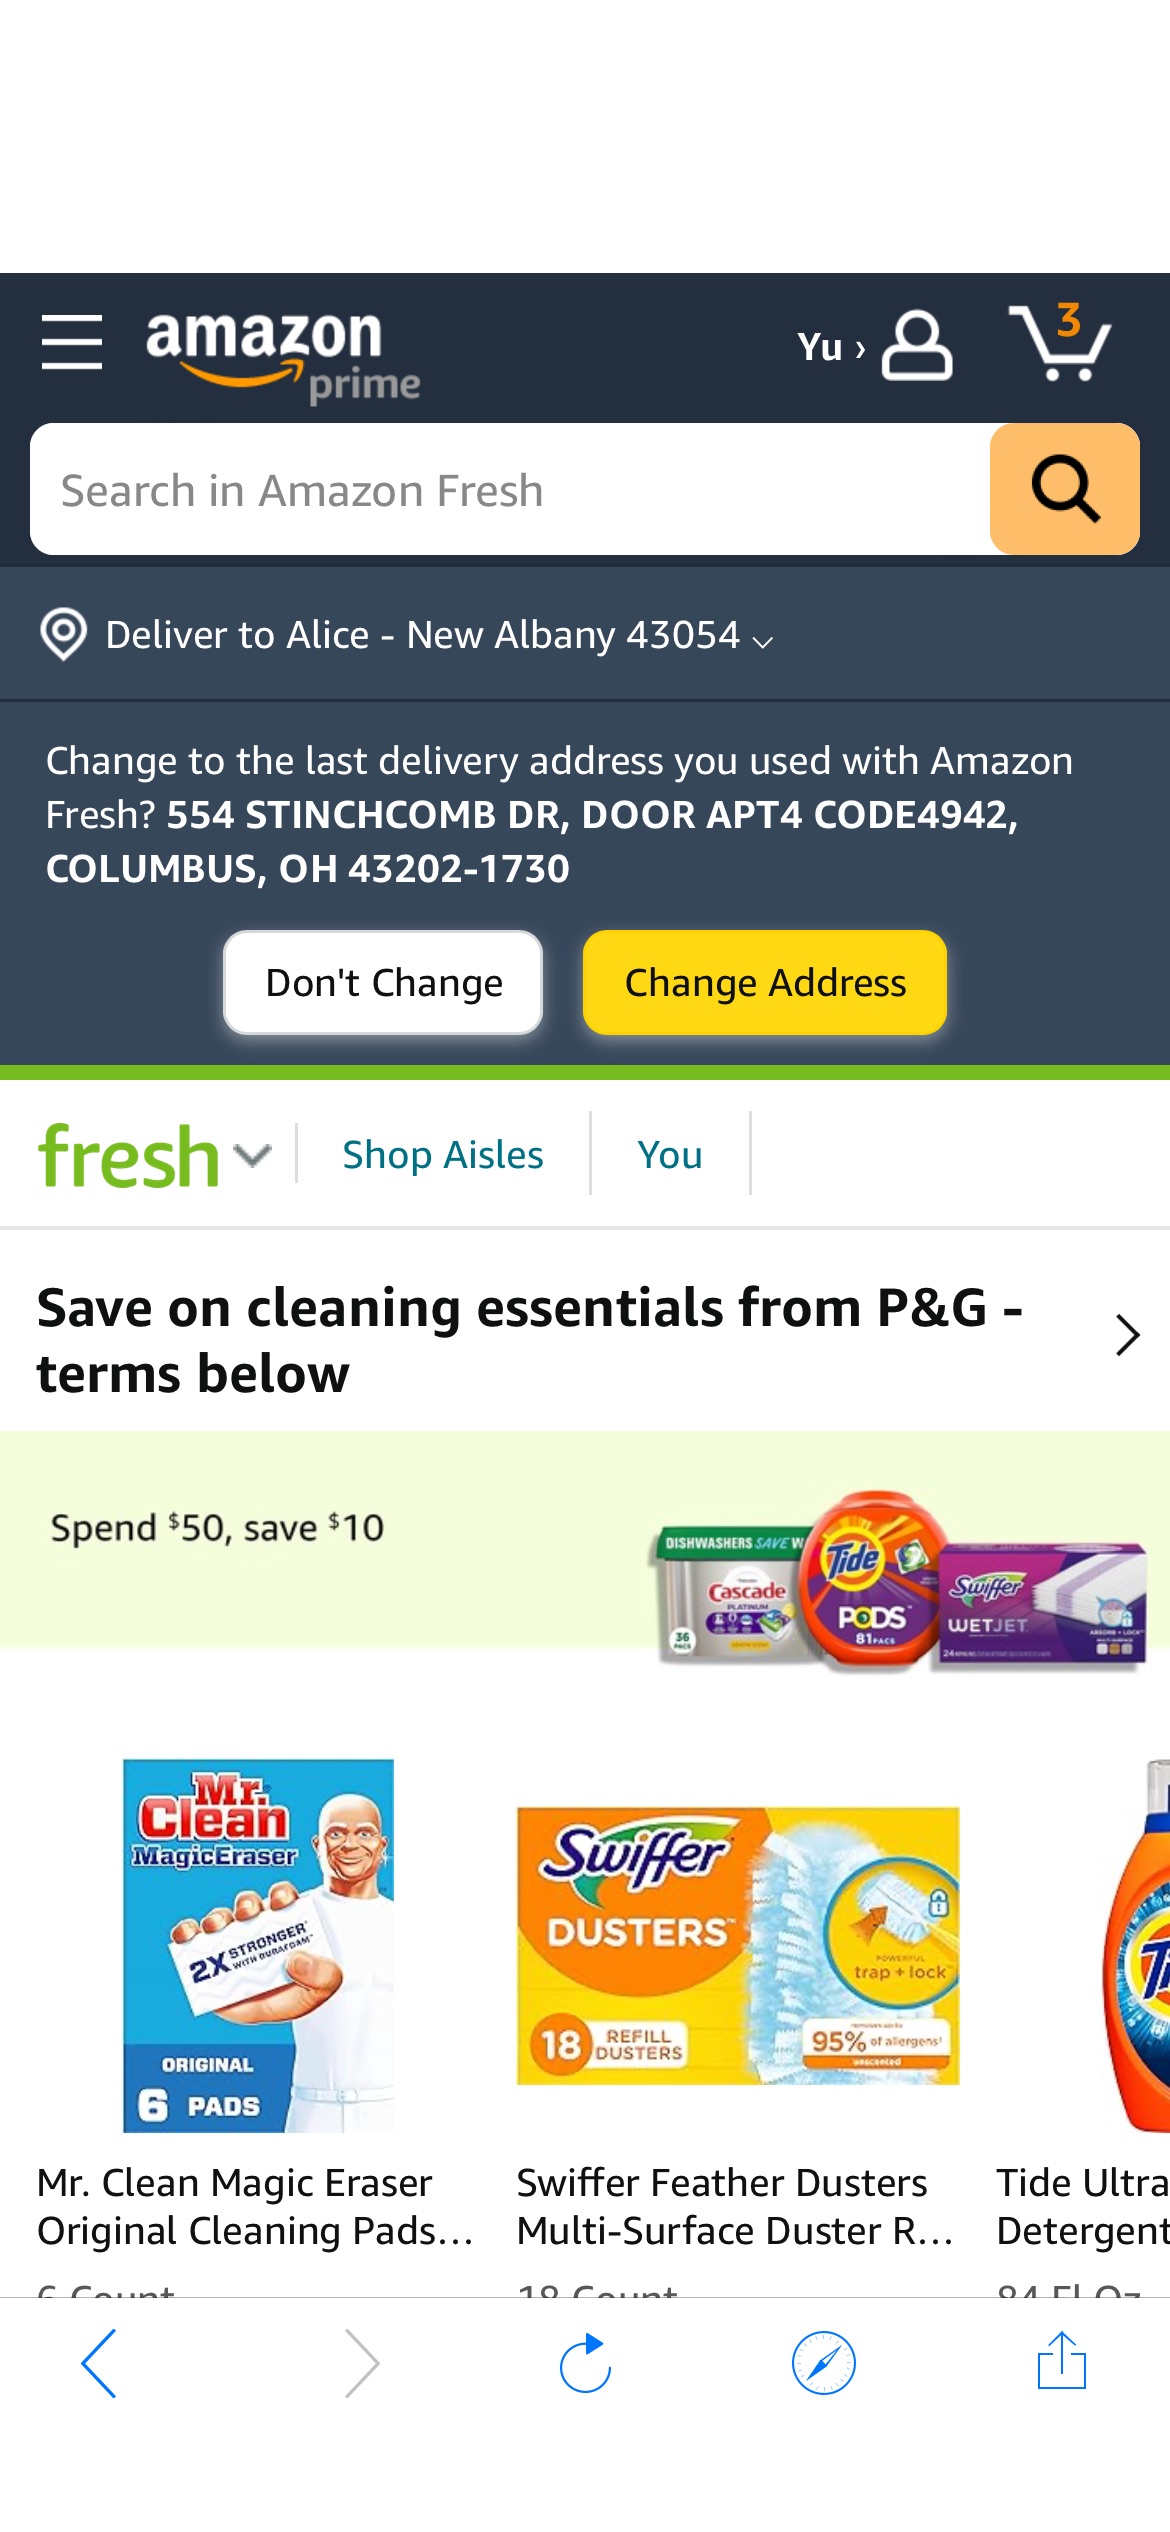 Amazon Fresh Groceries: Buy $50 Save $10 on P&G